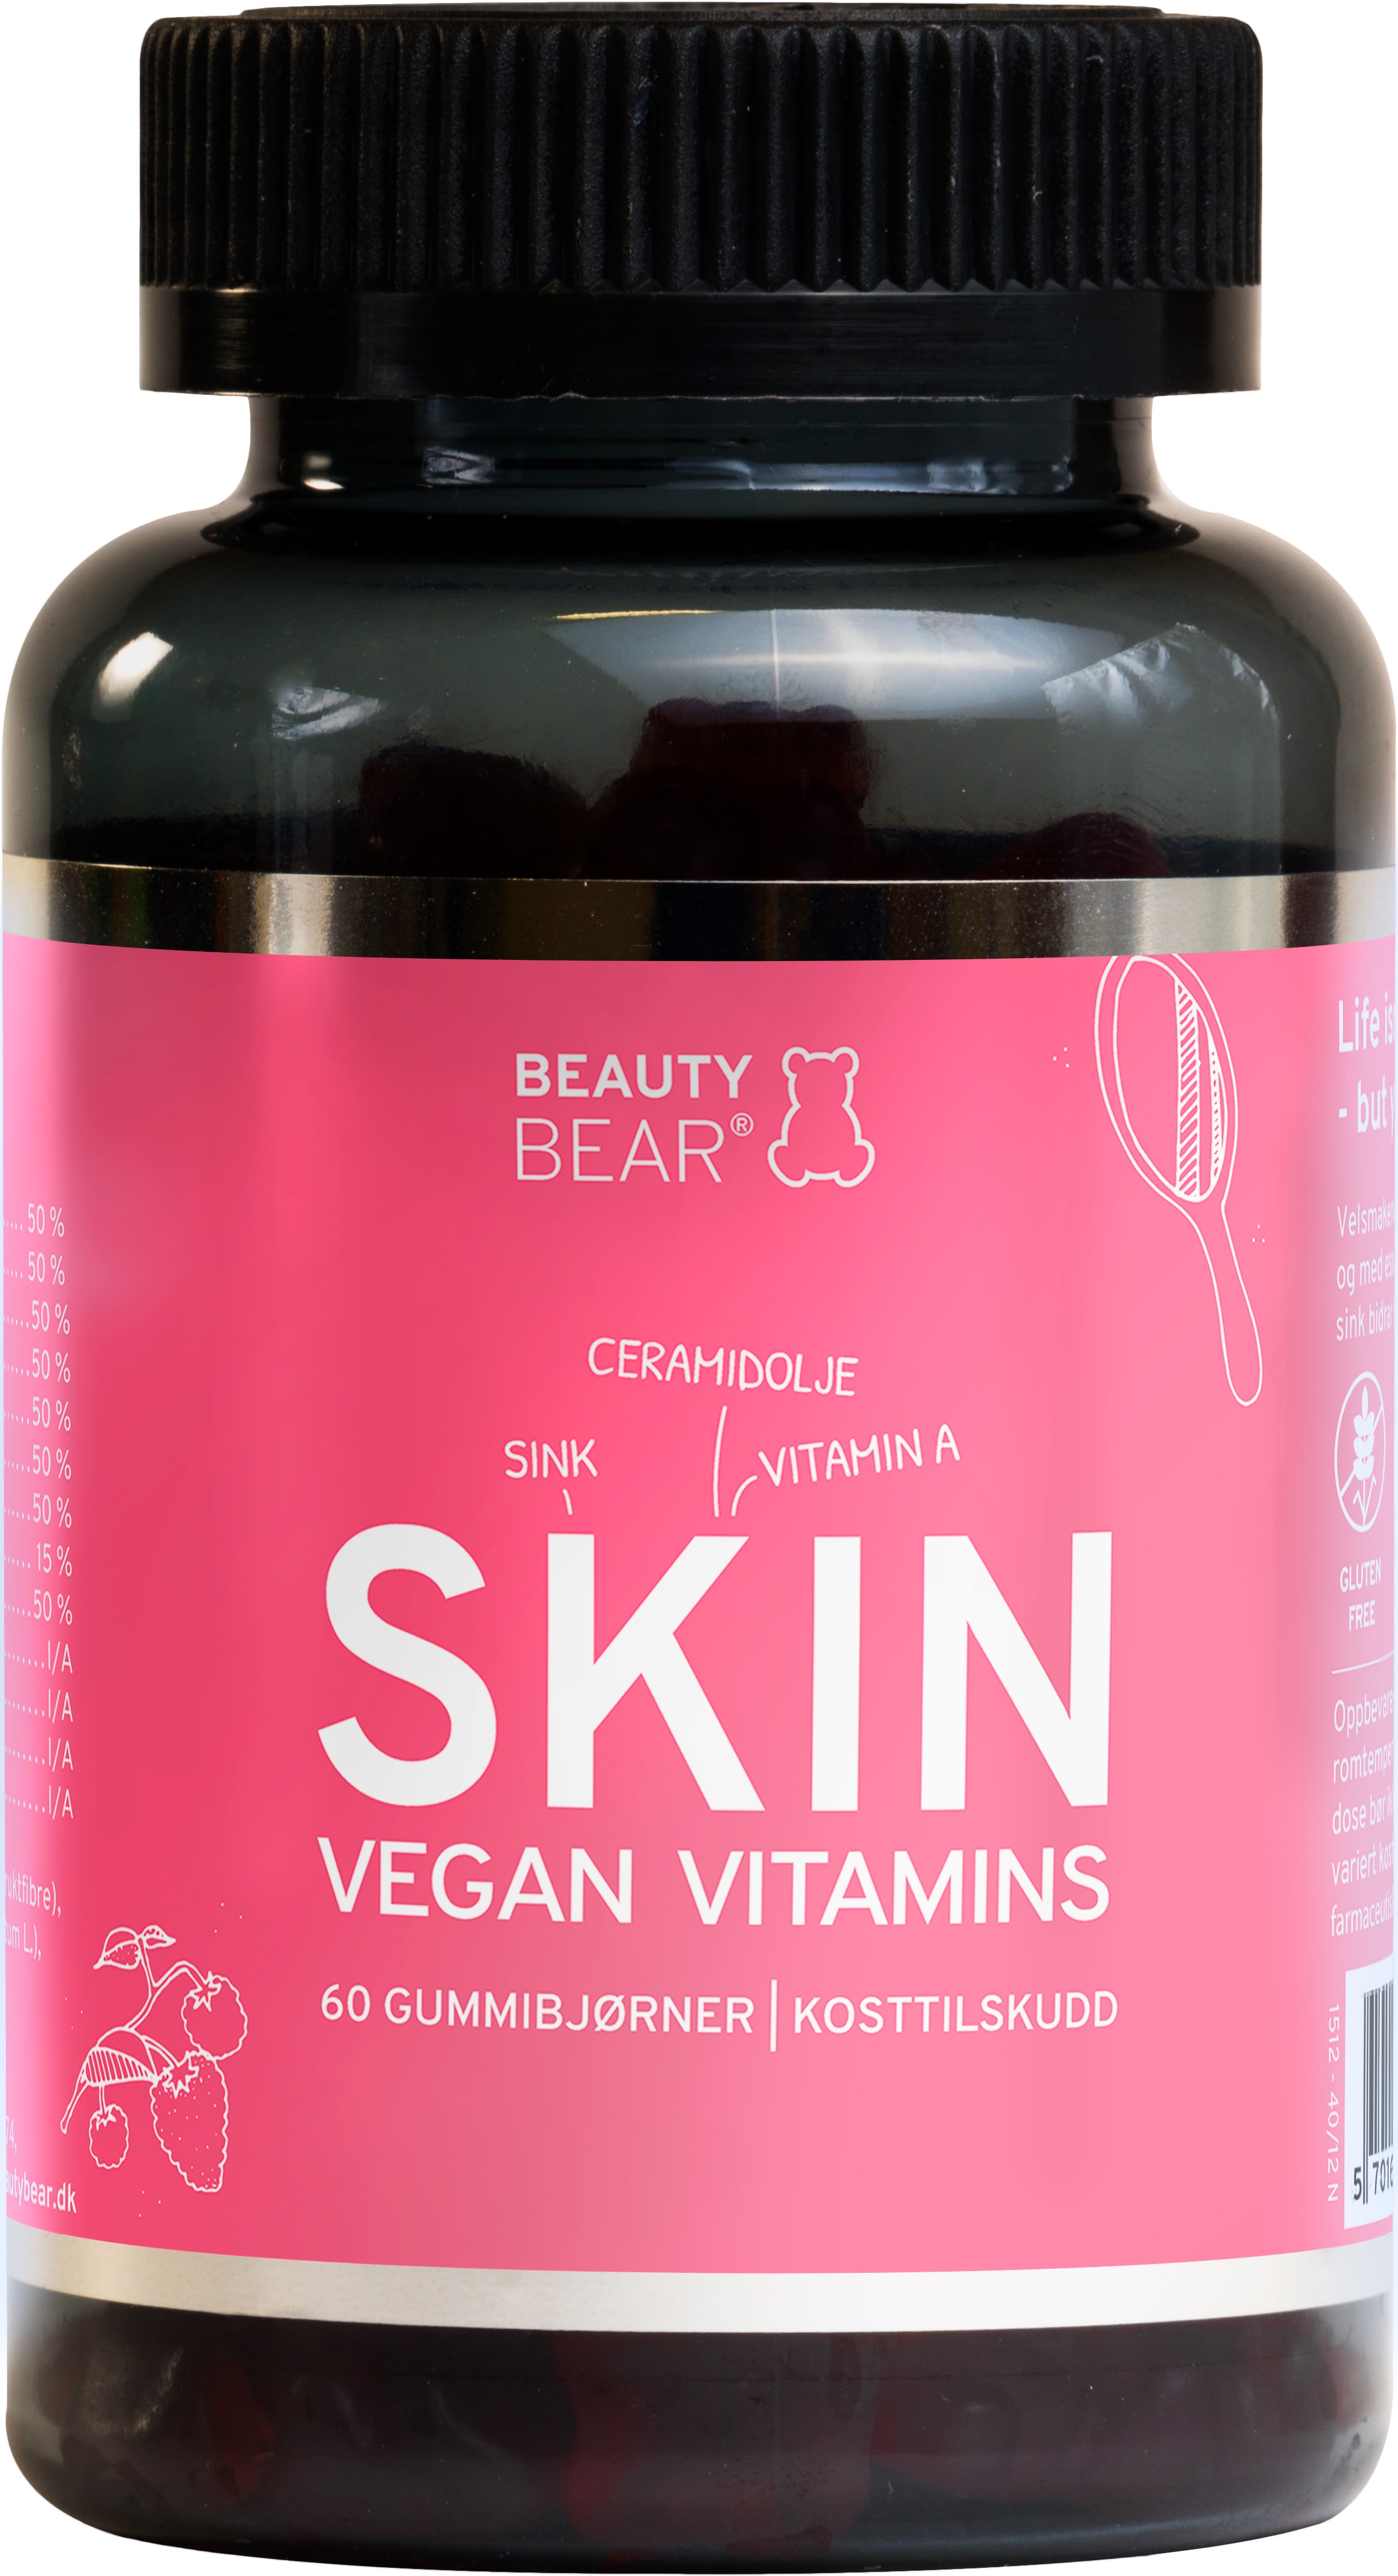 Beauty Bear Skin Vegan Vitamins tyggetab, 60 stk.